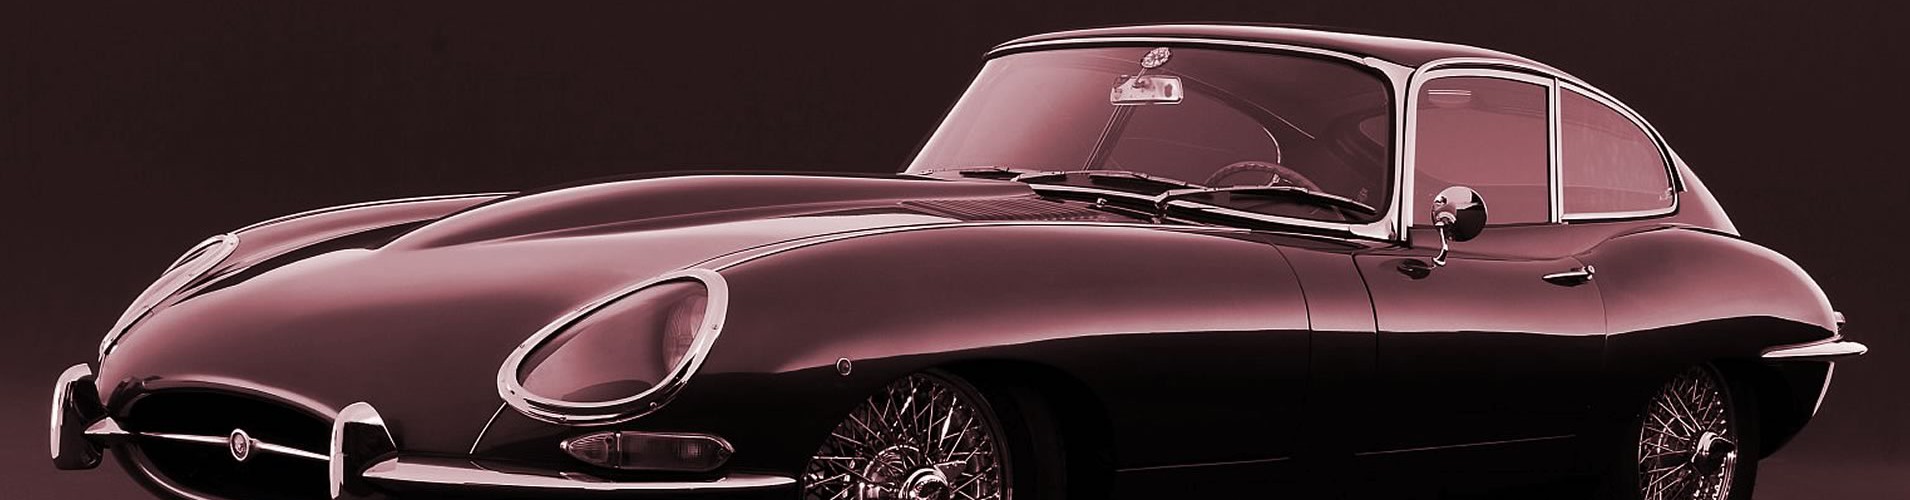 Jaguars erfolgreichster Sportwagen 1961 - 1975